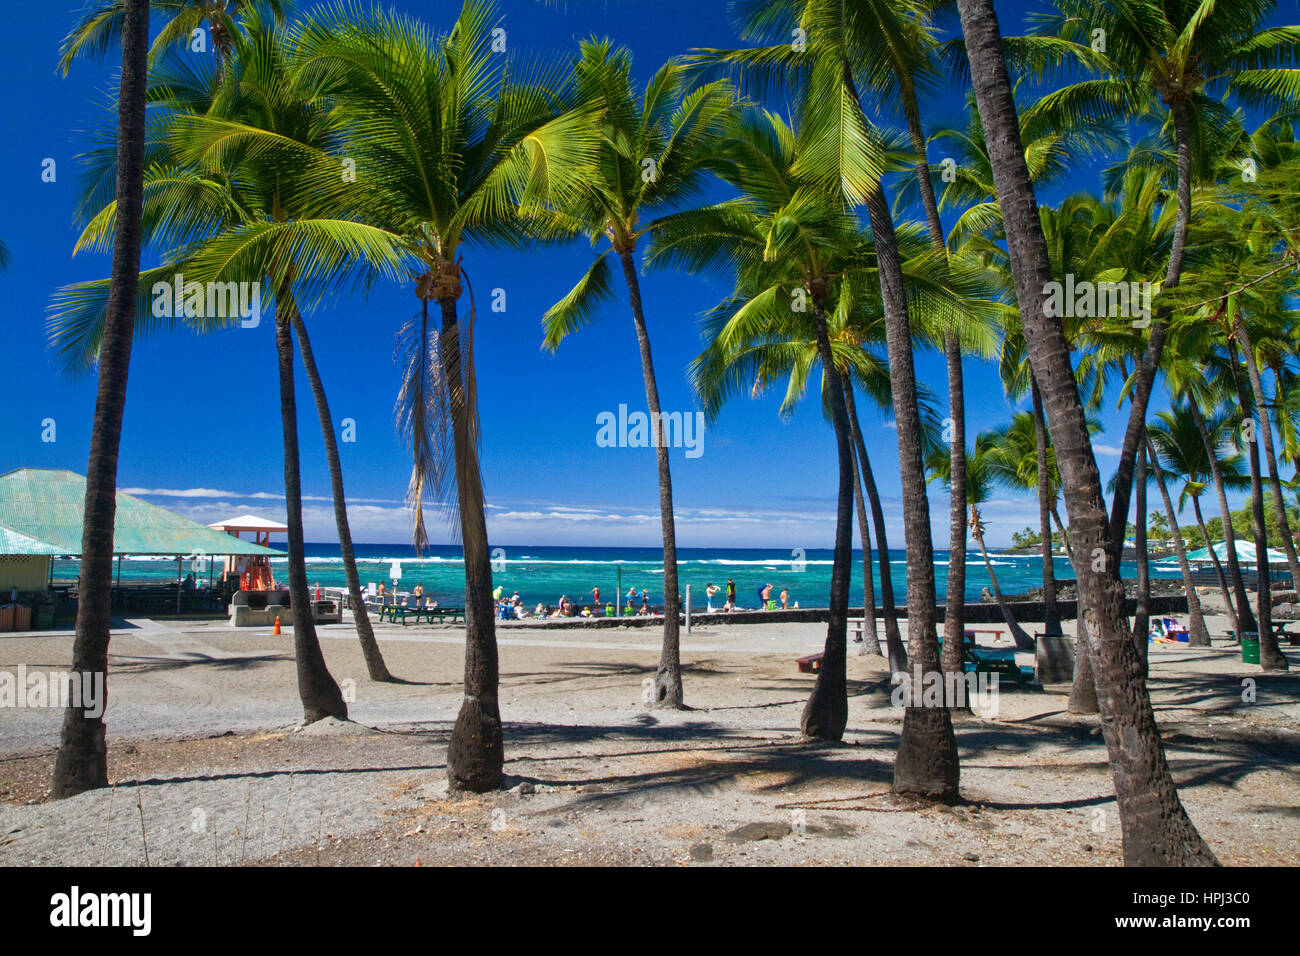 Beach and palm trees at Kailua-Kona on the Big Island of Hawaii, Hawaii, USA. Stock Photo